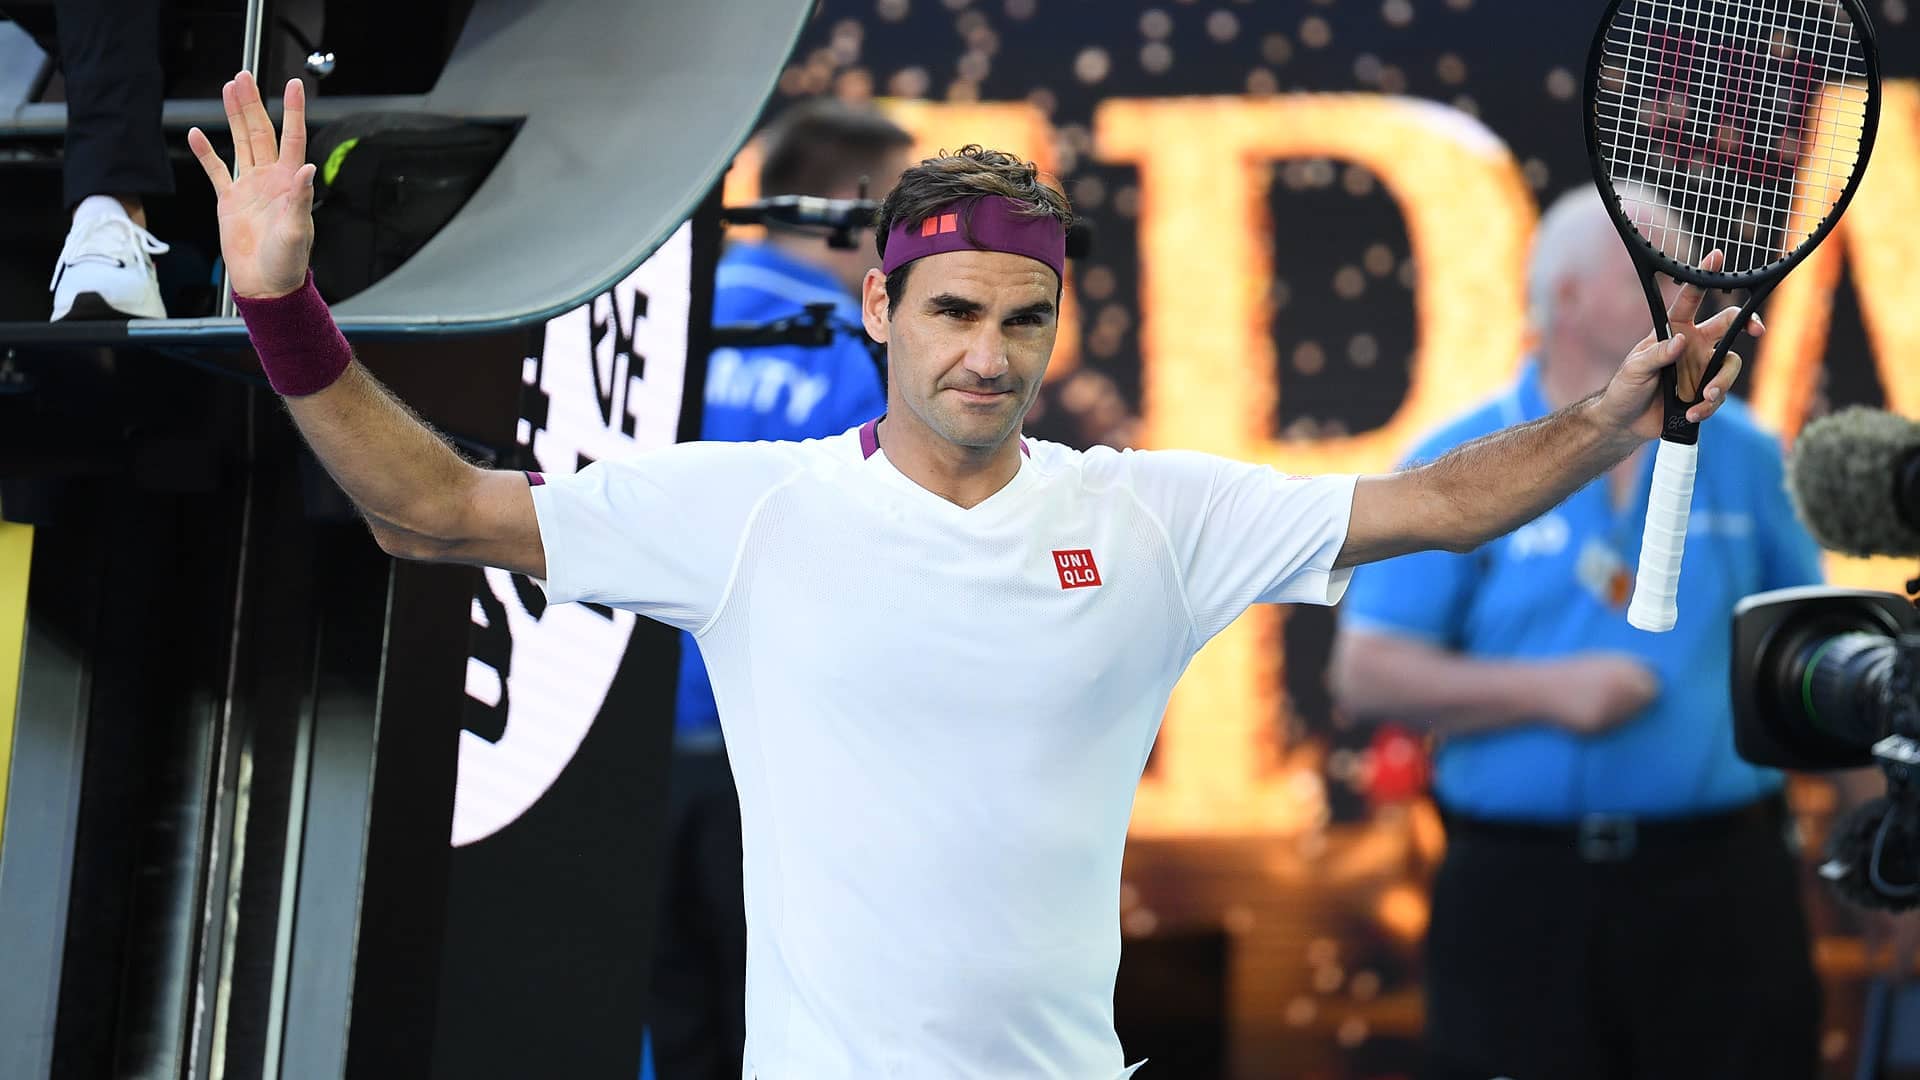 Six-time former champion Roger Federer celebrates saving seven match points to beat Tennys Sandgren on Tuesday at the Australian Open.